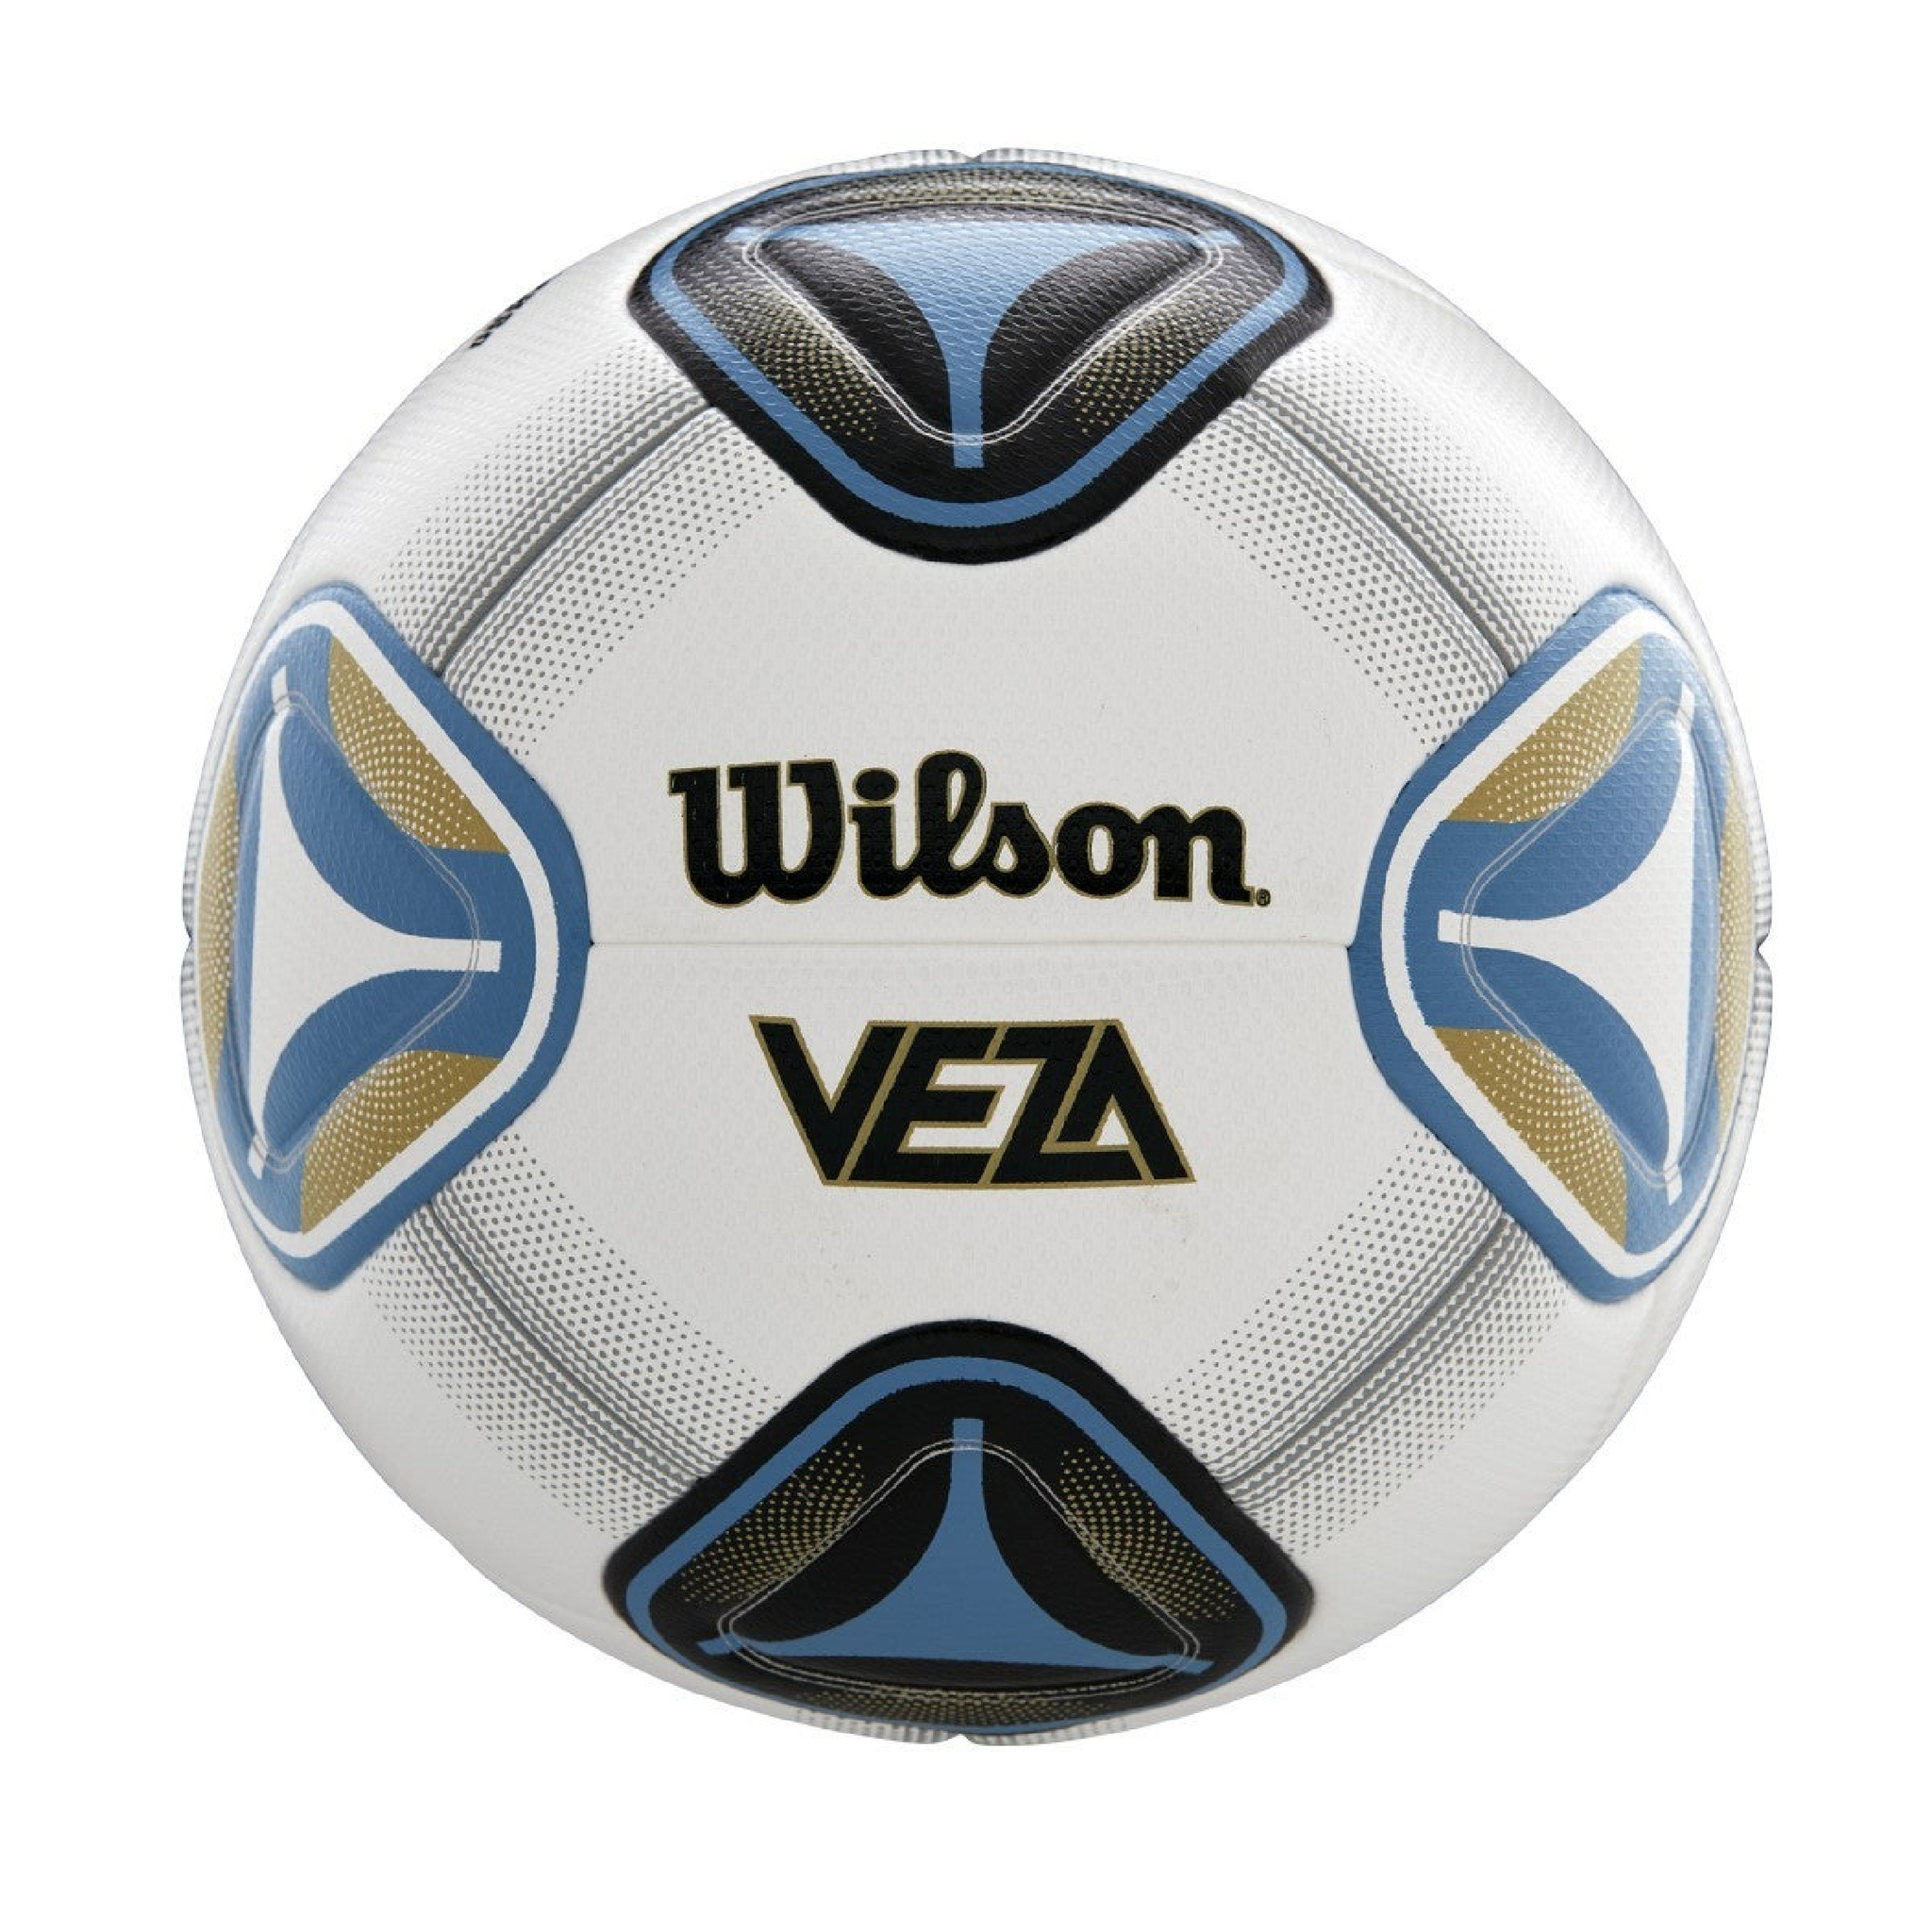 Wilson Veza Soccer Ball - Size 5